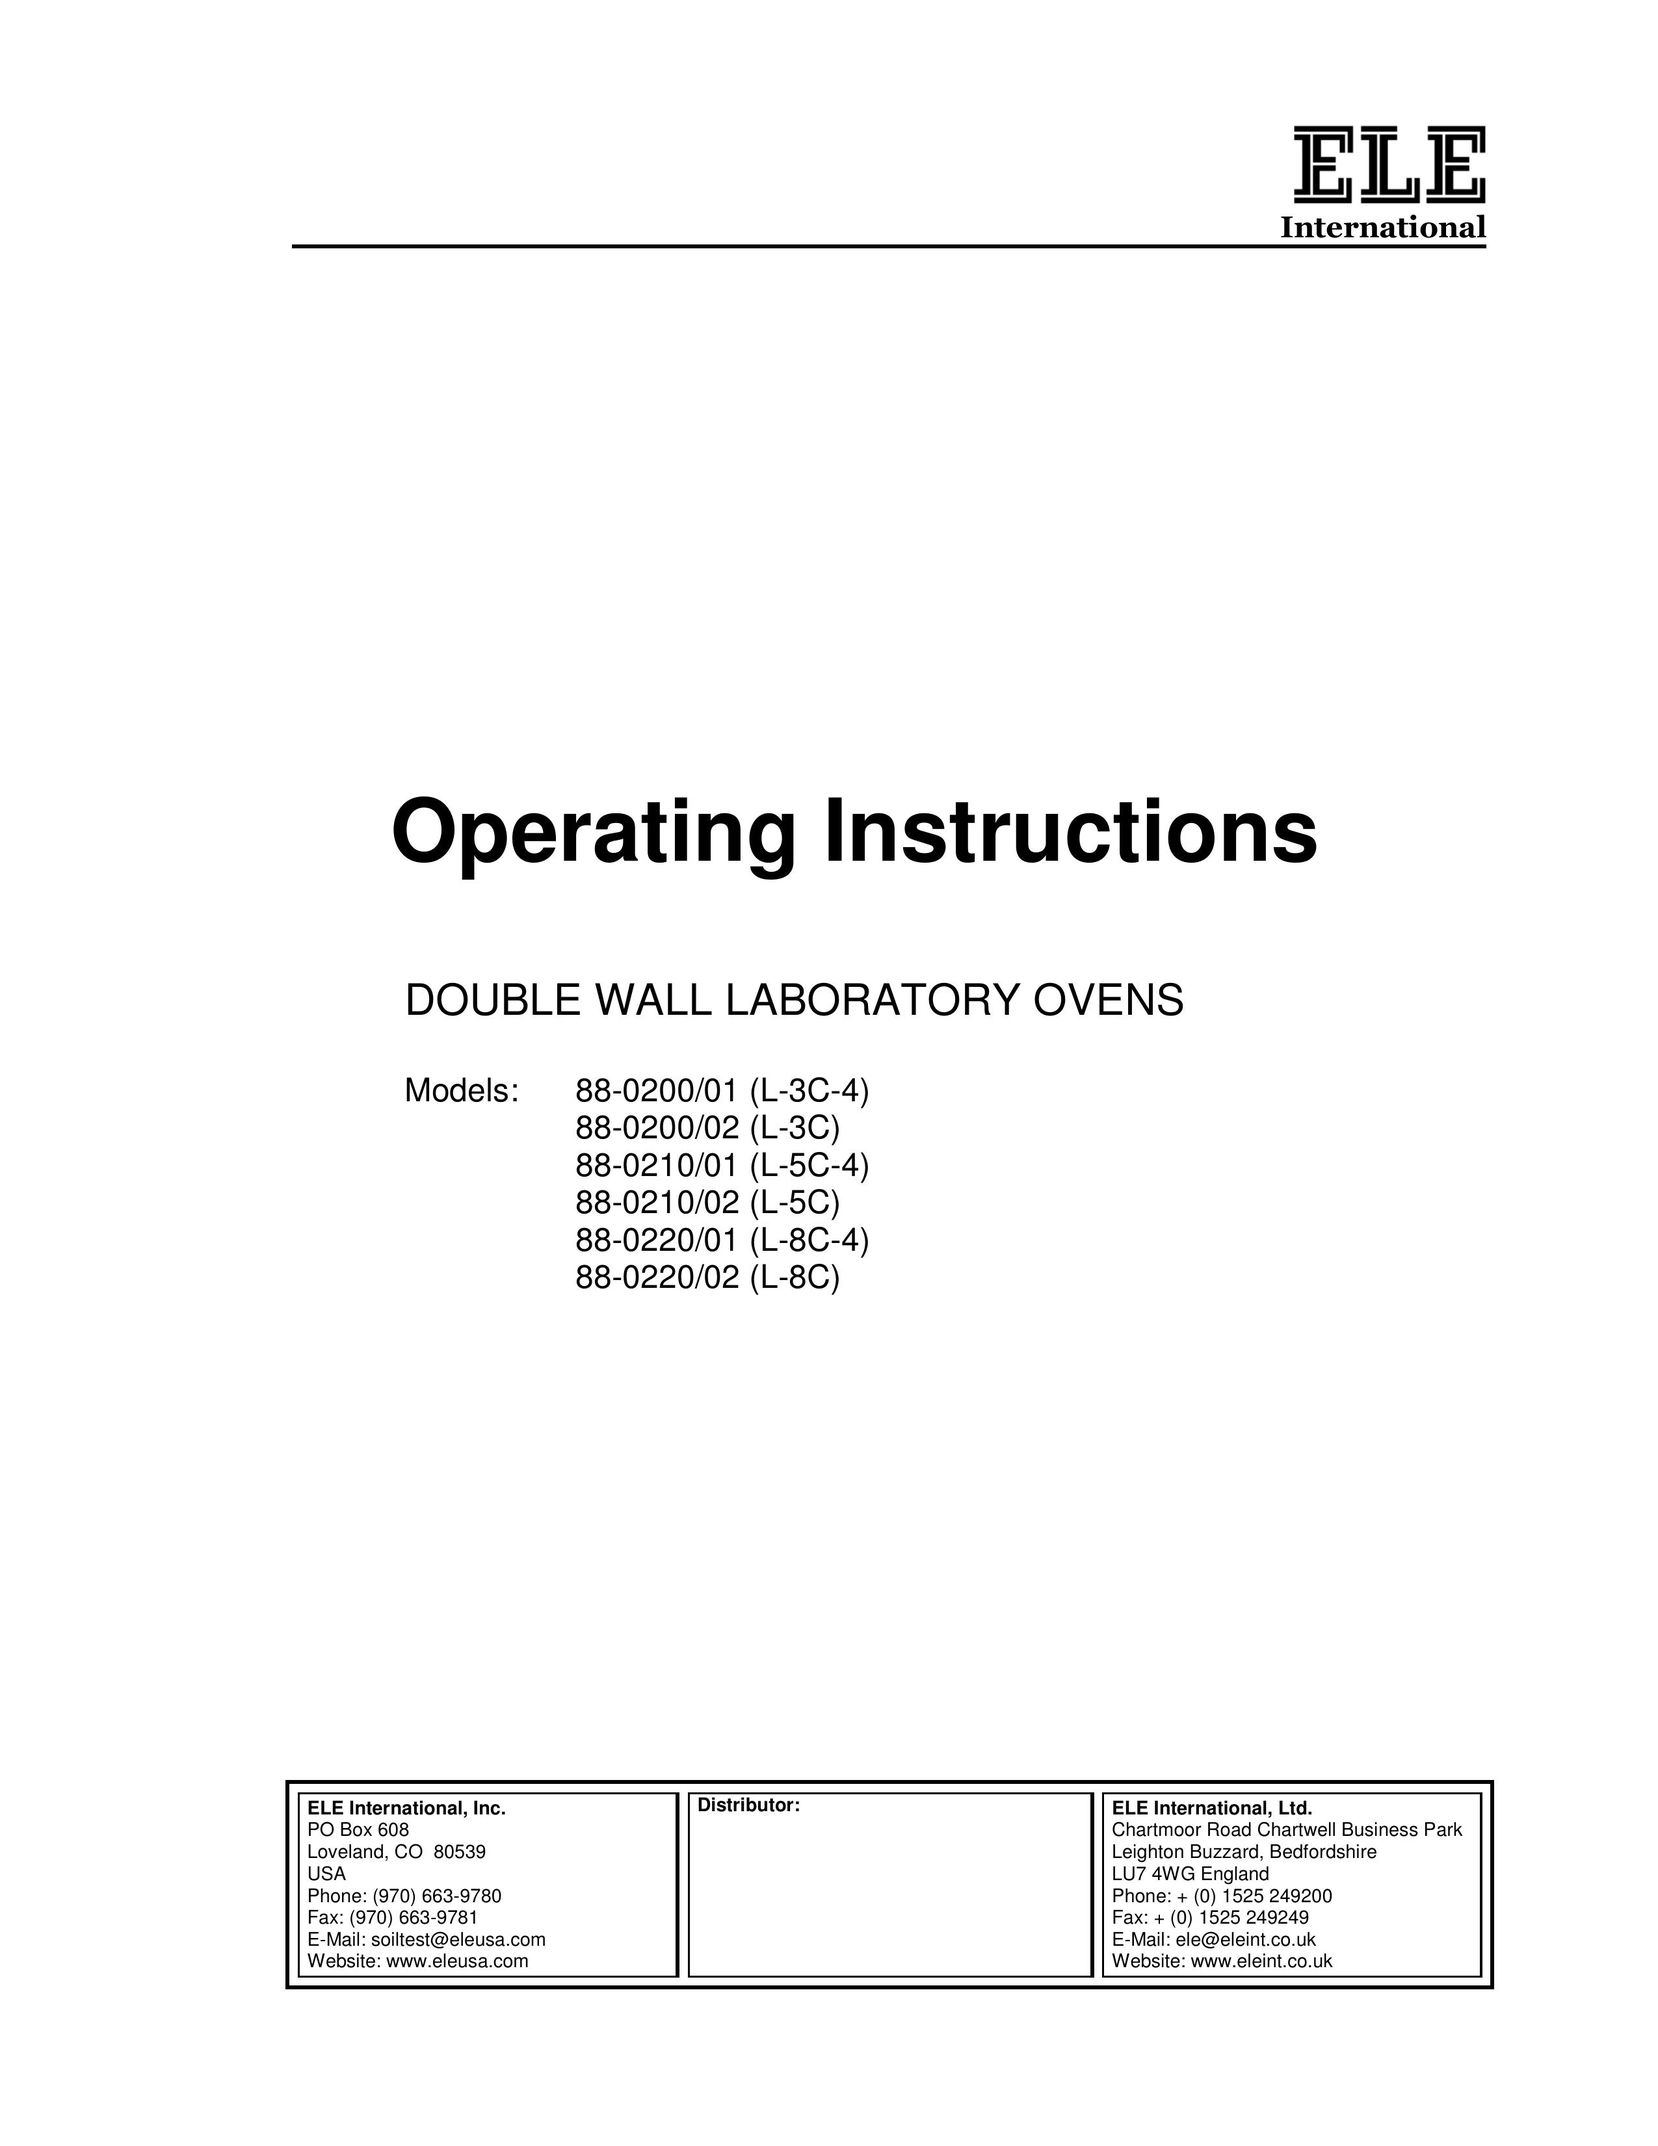 Ele 88-0220/01 (L-8C-4) Double Oven User Manual